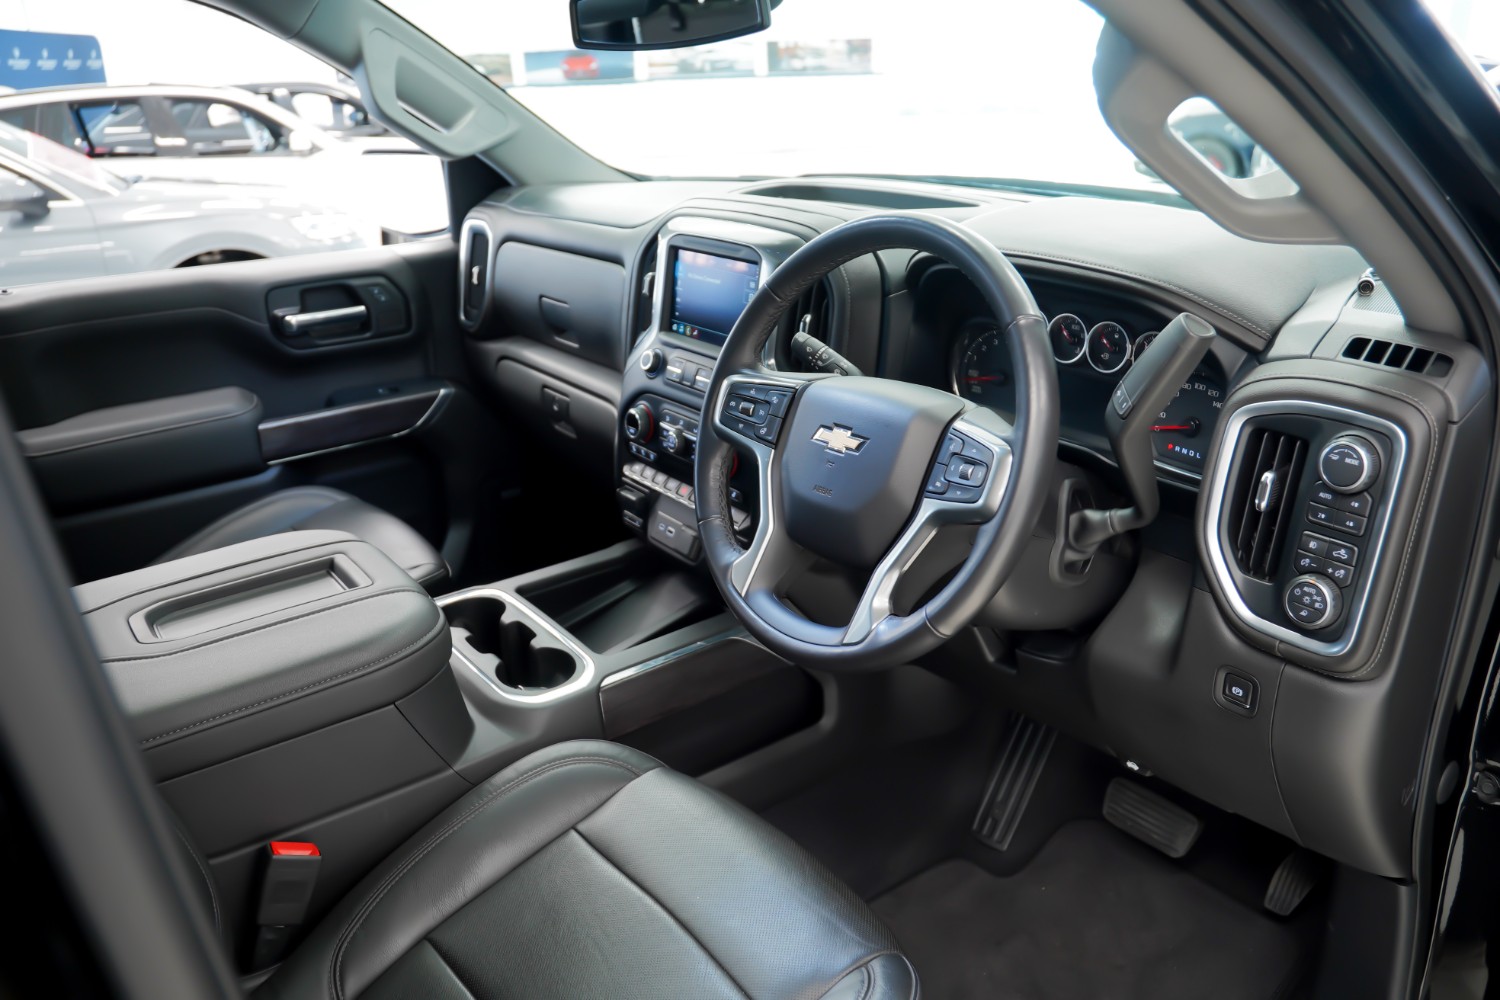 2020 Chevrolet Silverado T1 LTZ Premium Edition Ute Image 19